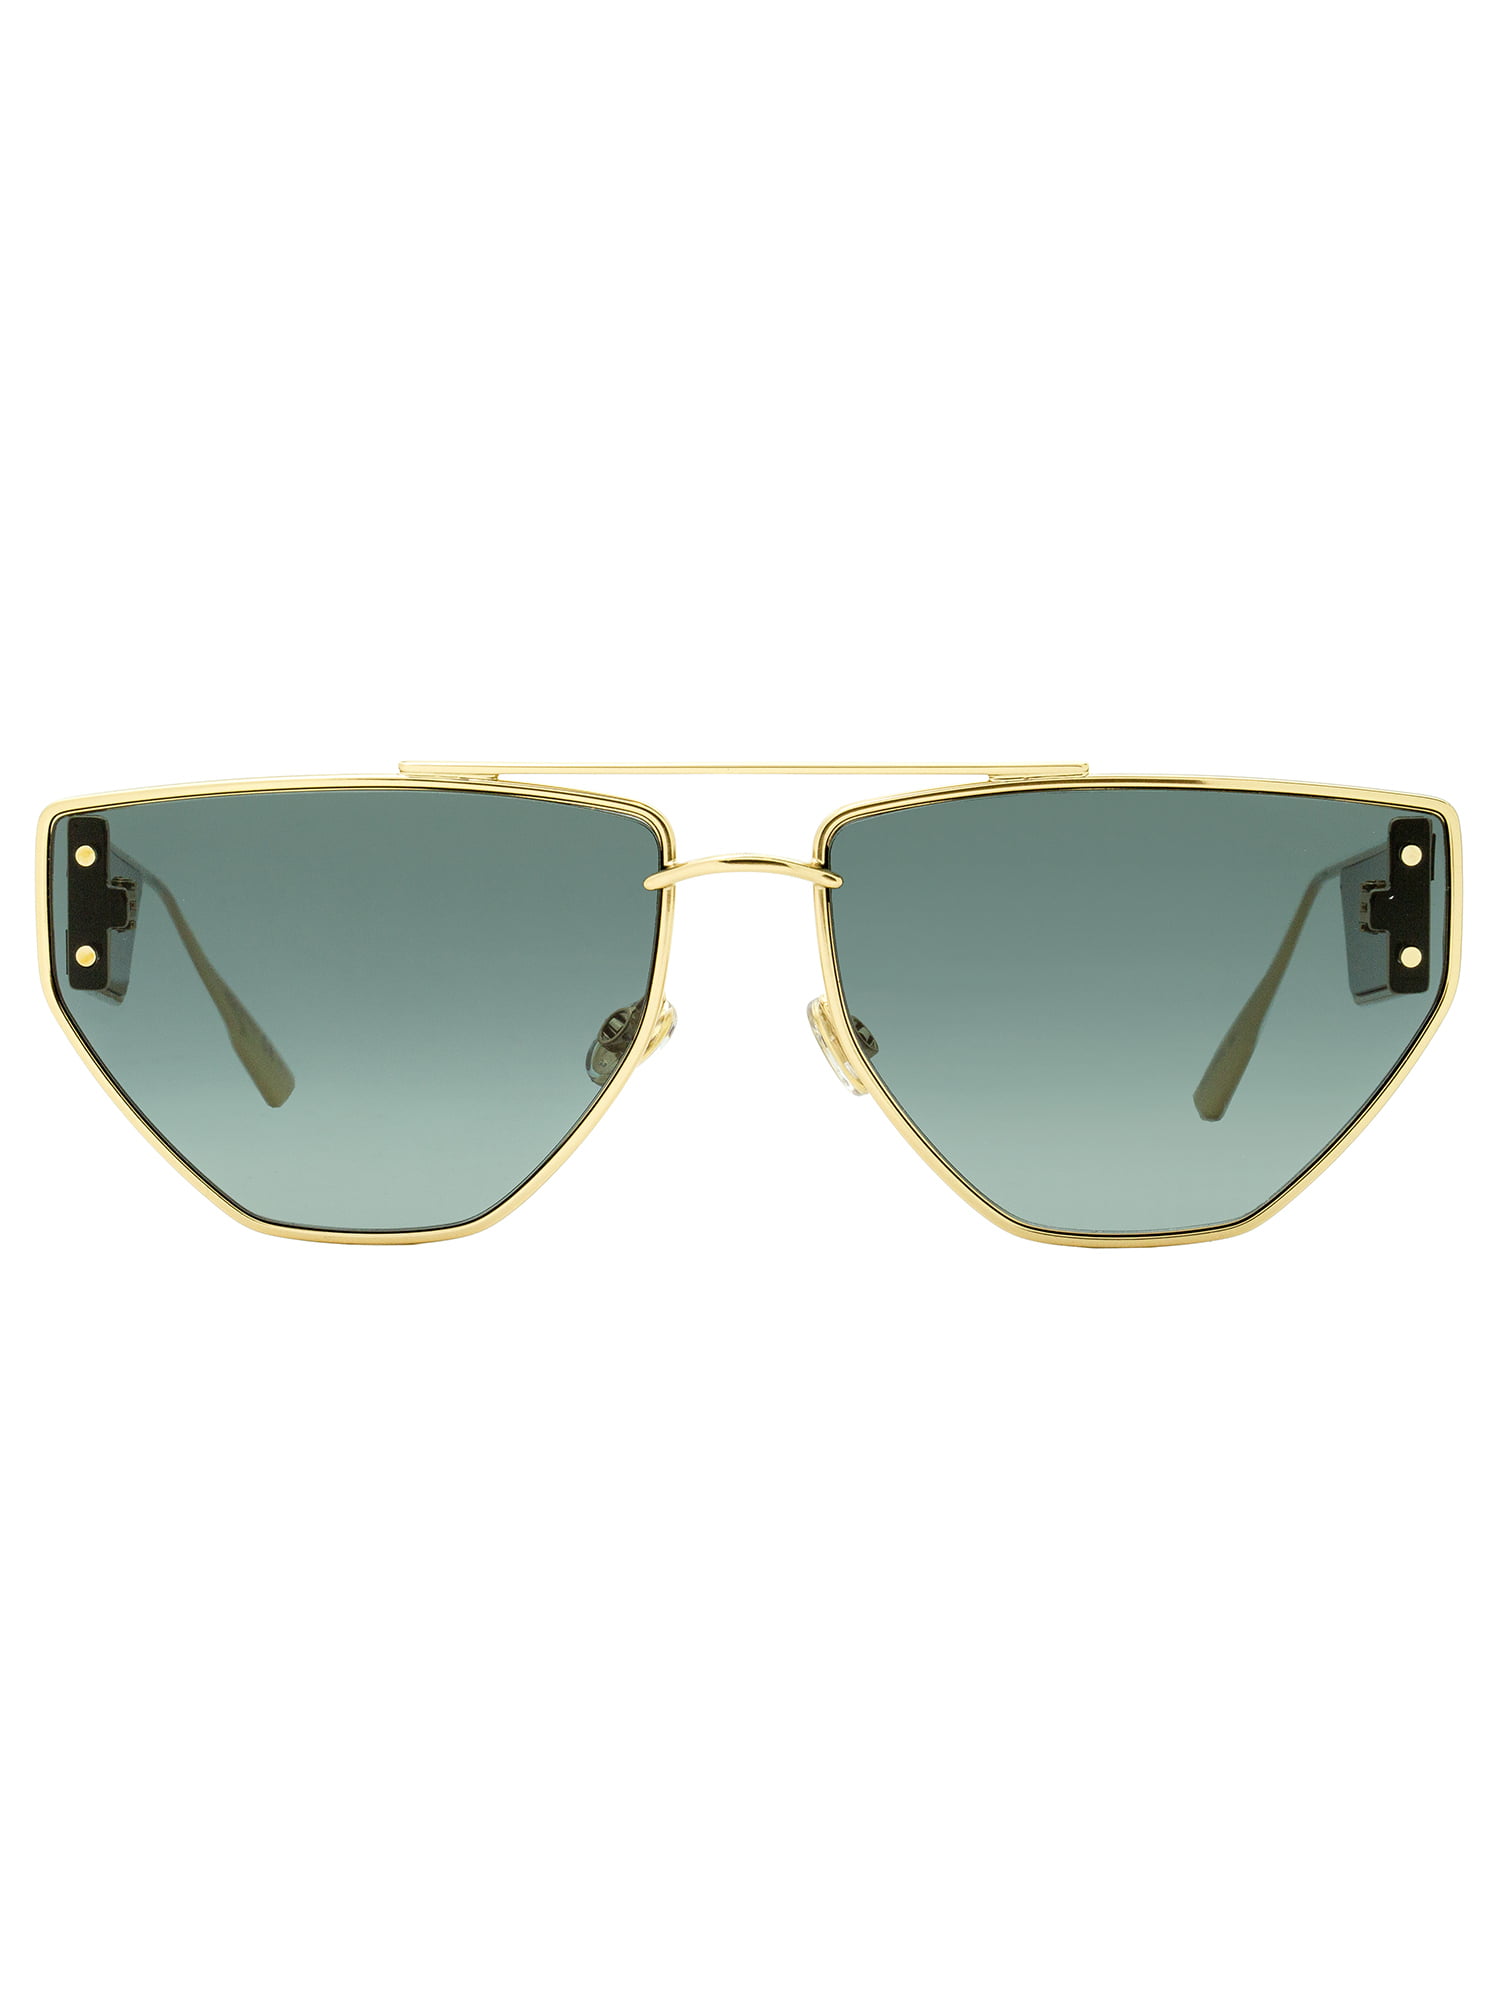 Dior Clan 2 Multilayer Gold Geometric Ladies Sunglasses DIOR CLAN2 0000 SQ  61  Walmartcom